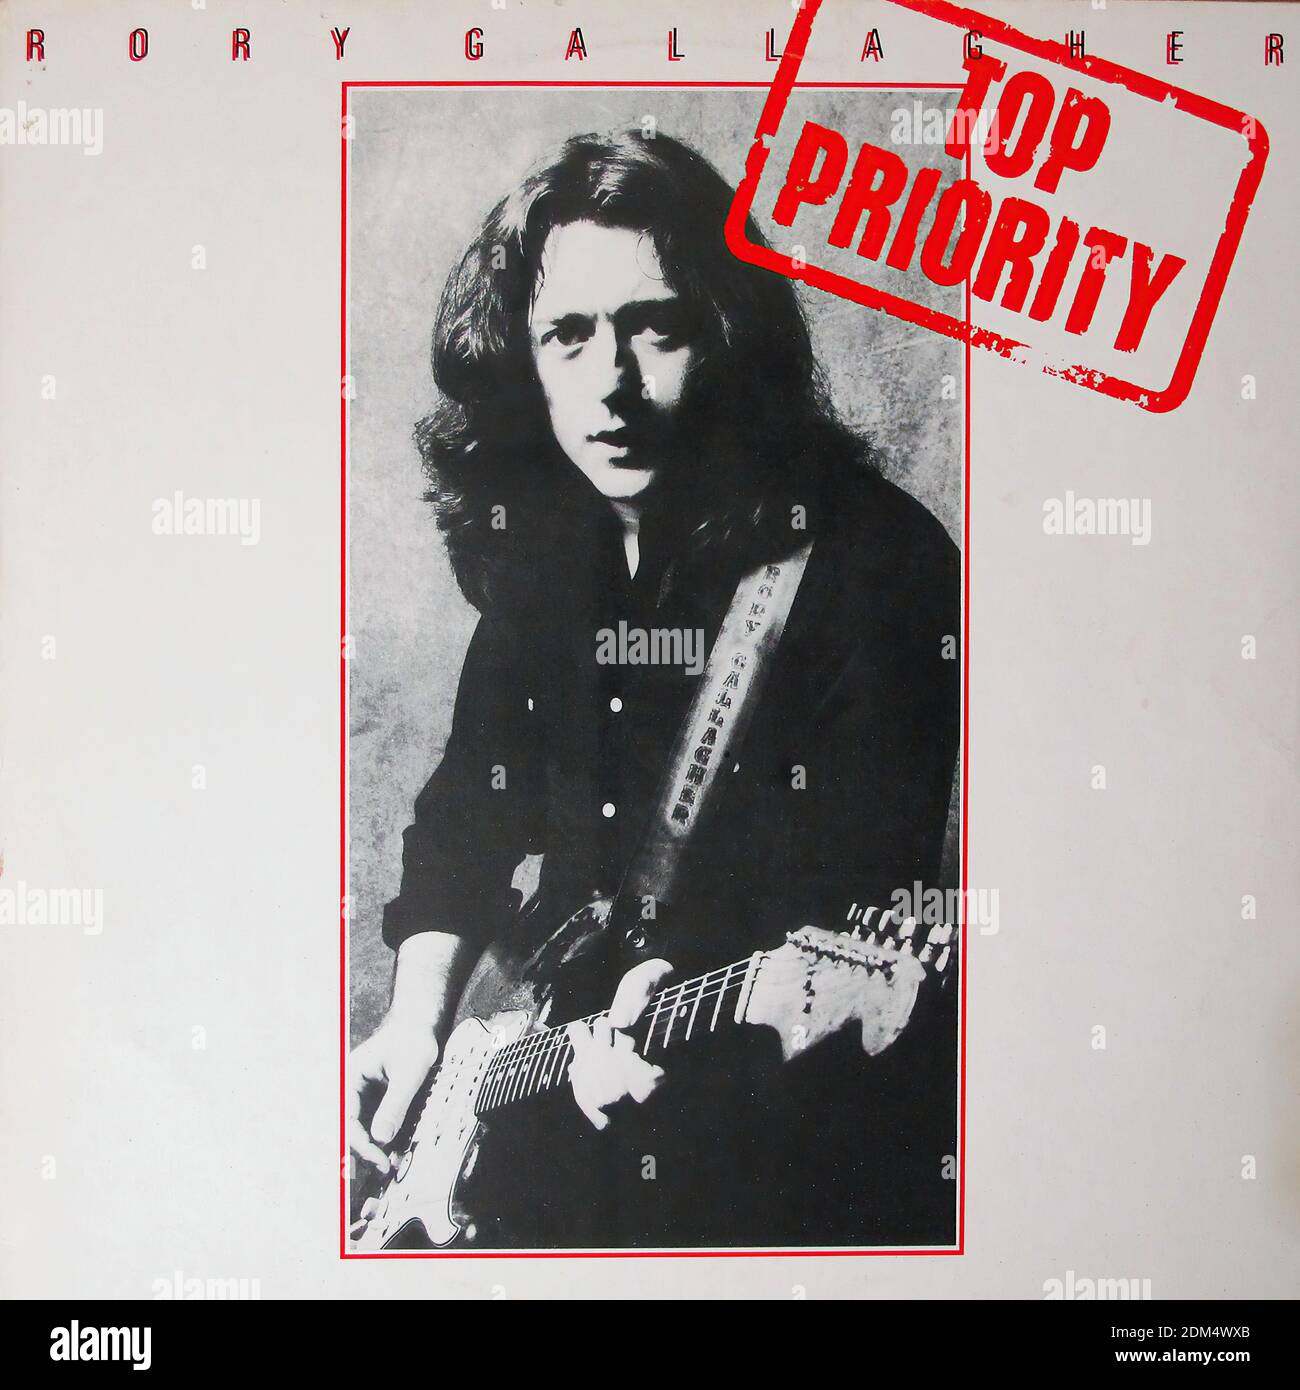 Rory Gallagher Top Priority 12 VINYL ALBUM  - Vintage Vinyl Record Cover Stock Photo